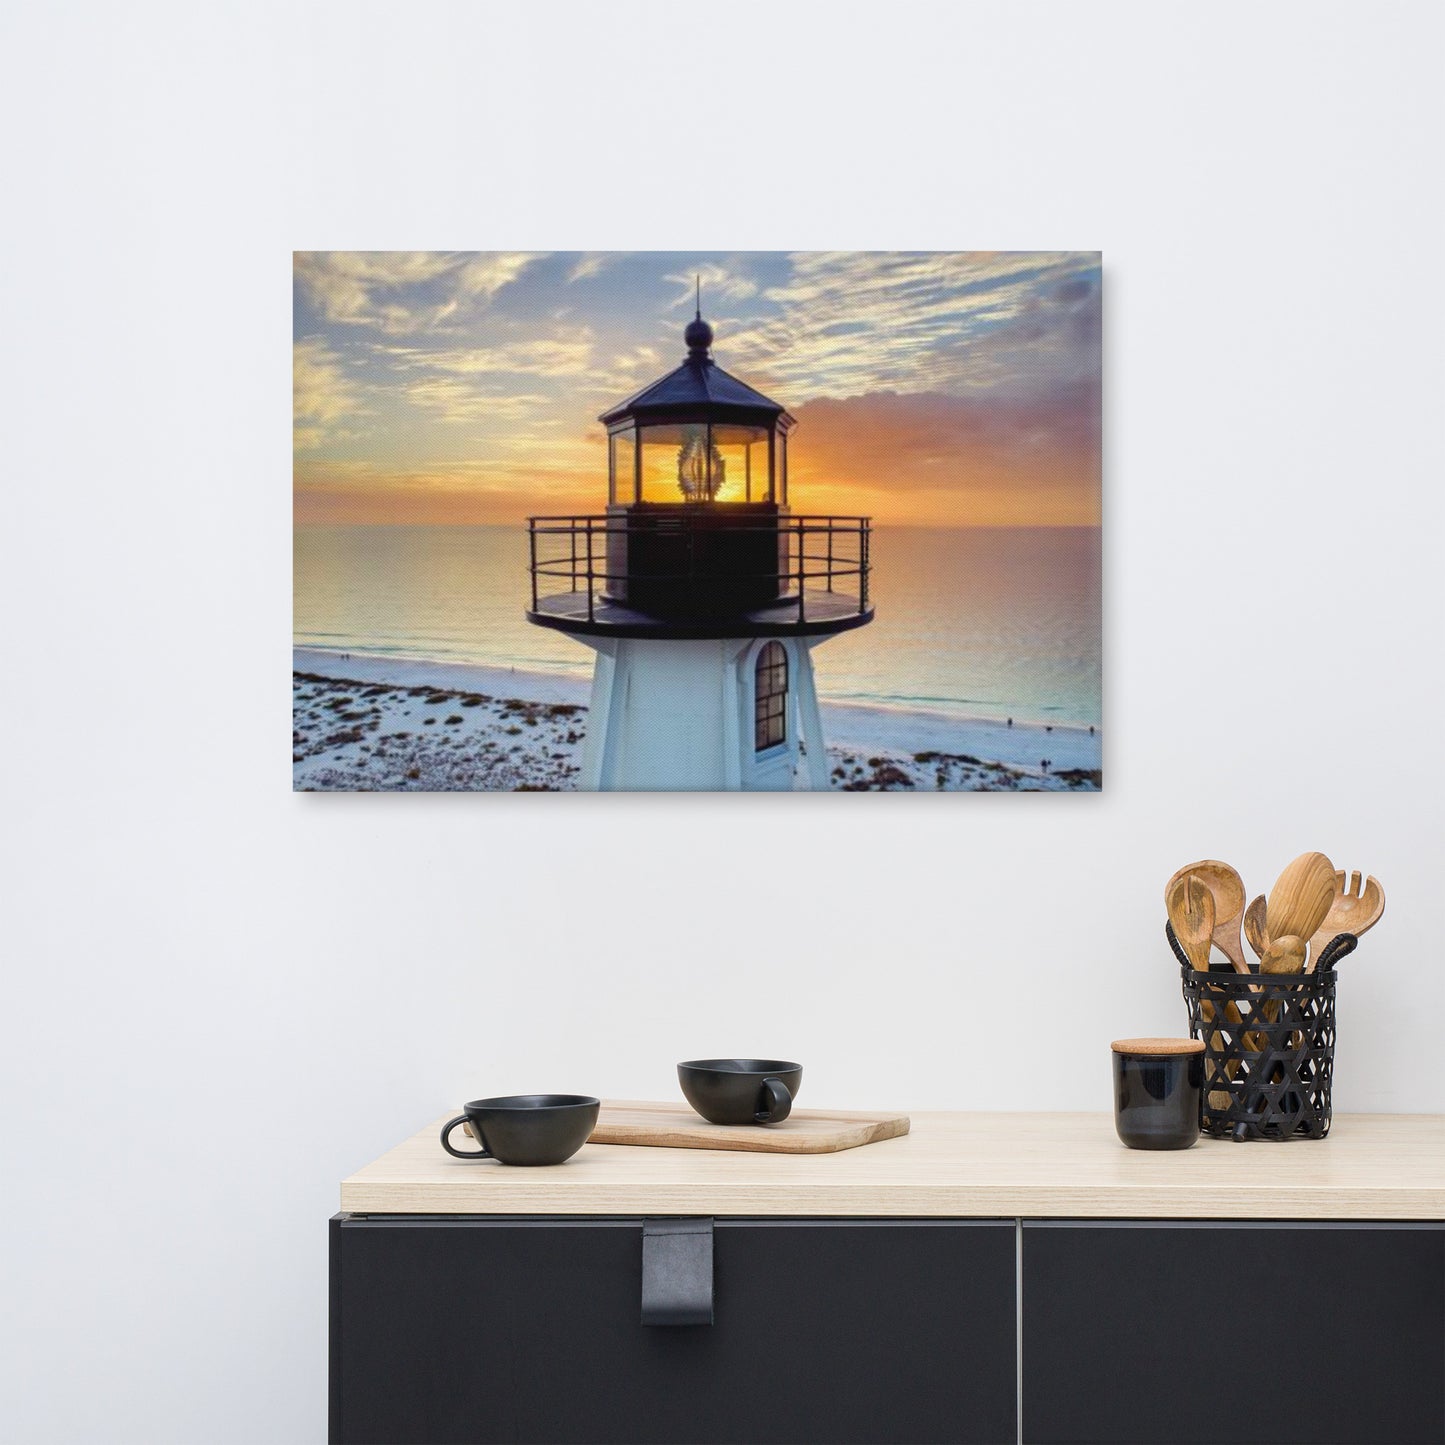 St Mark Lighthouse at Sunset Coastal Architectural Photograph Canvas Wall Art Print